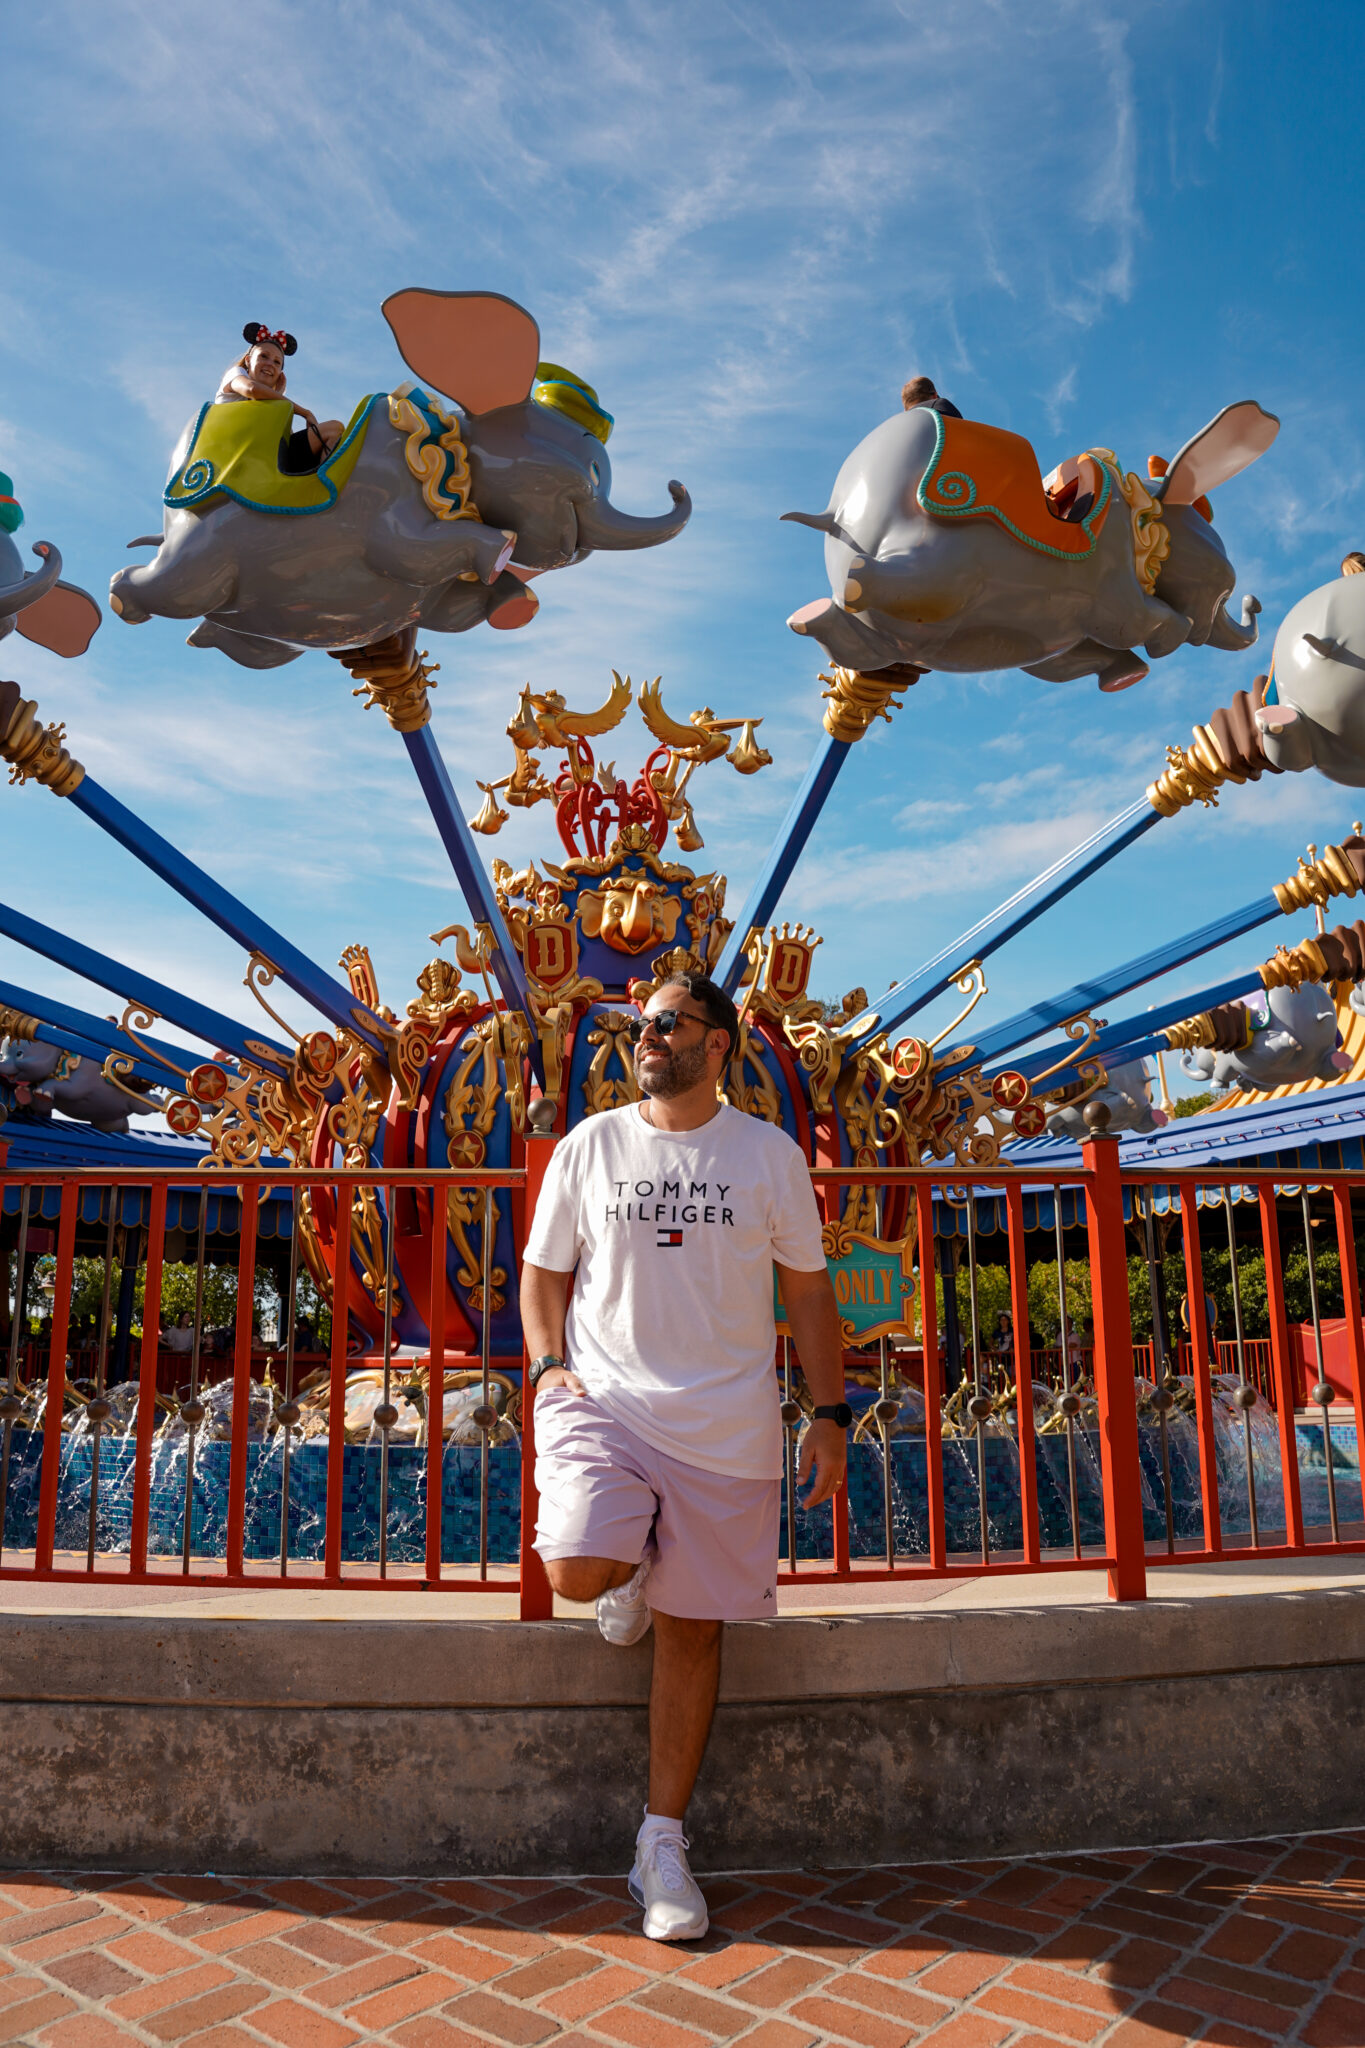 Carlos em Frente a Dumbo the Flying Elephant